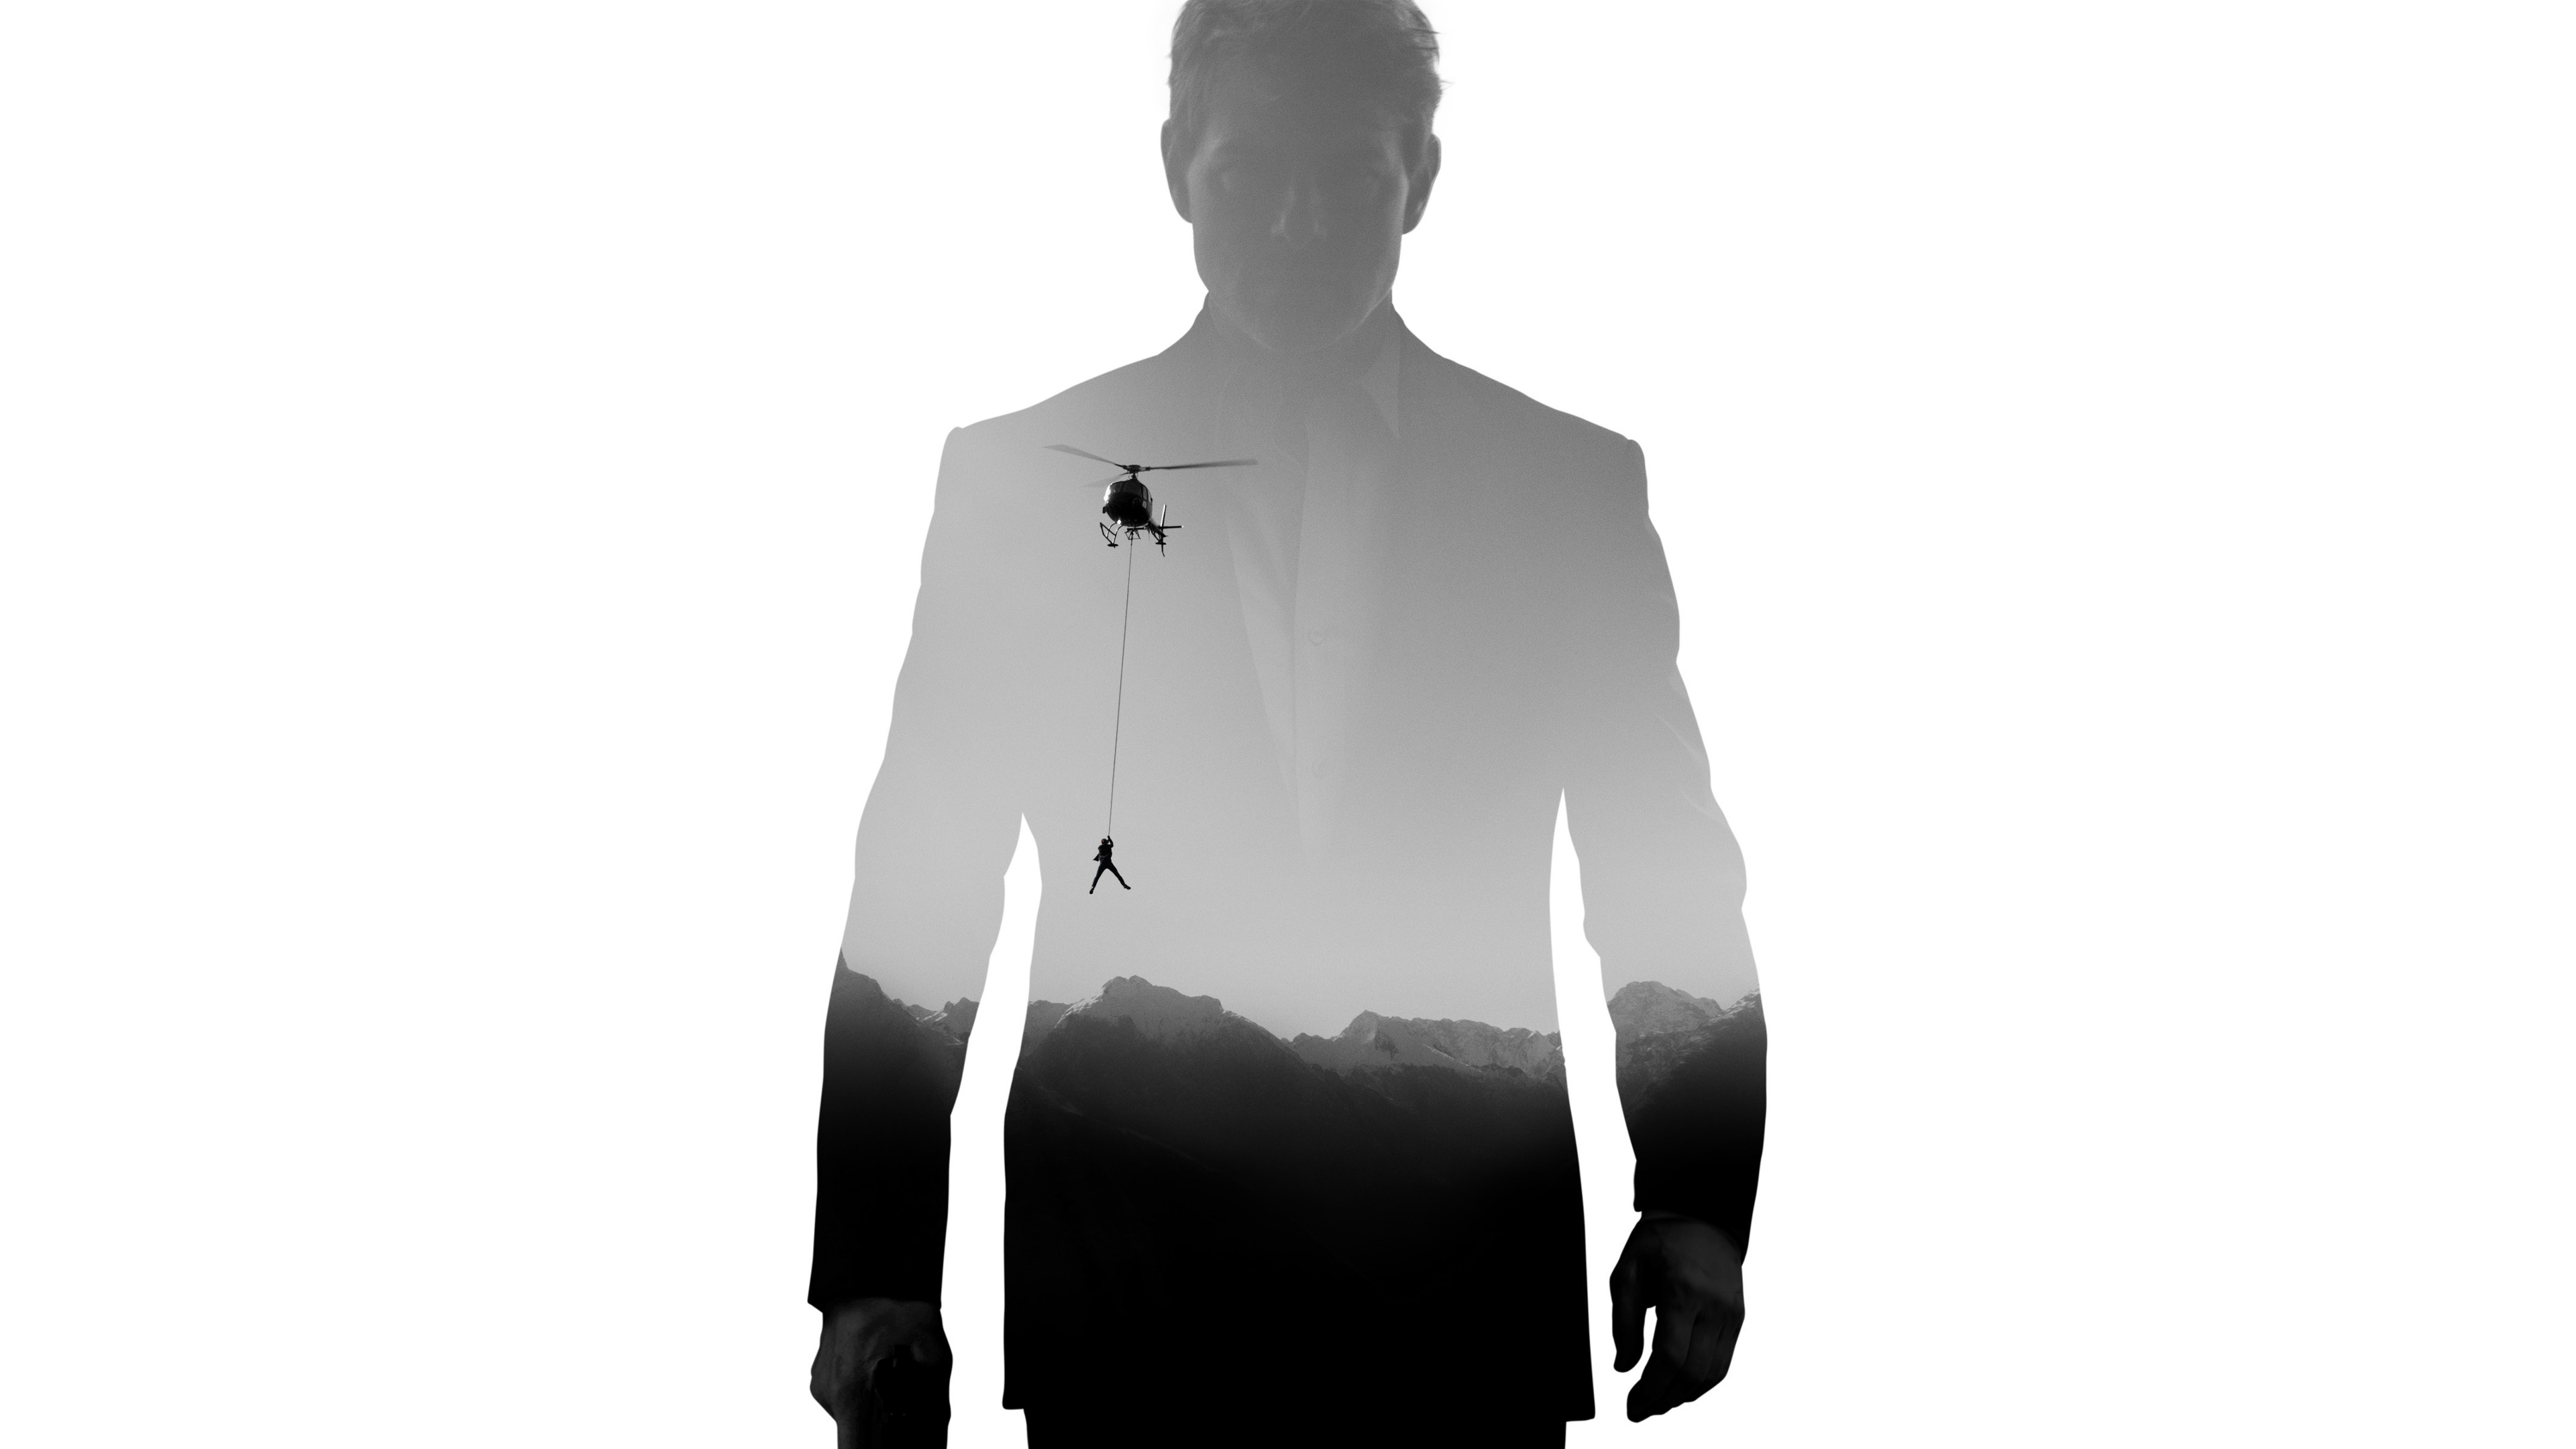 Man in Black Suit Jacket. Wallpaper in 3840x2160 Resolution